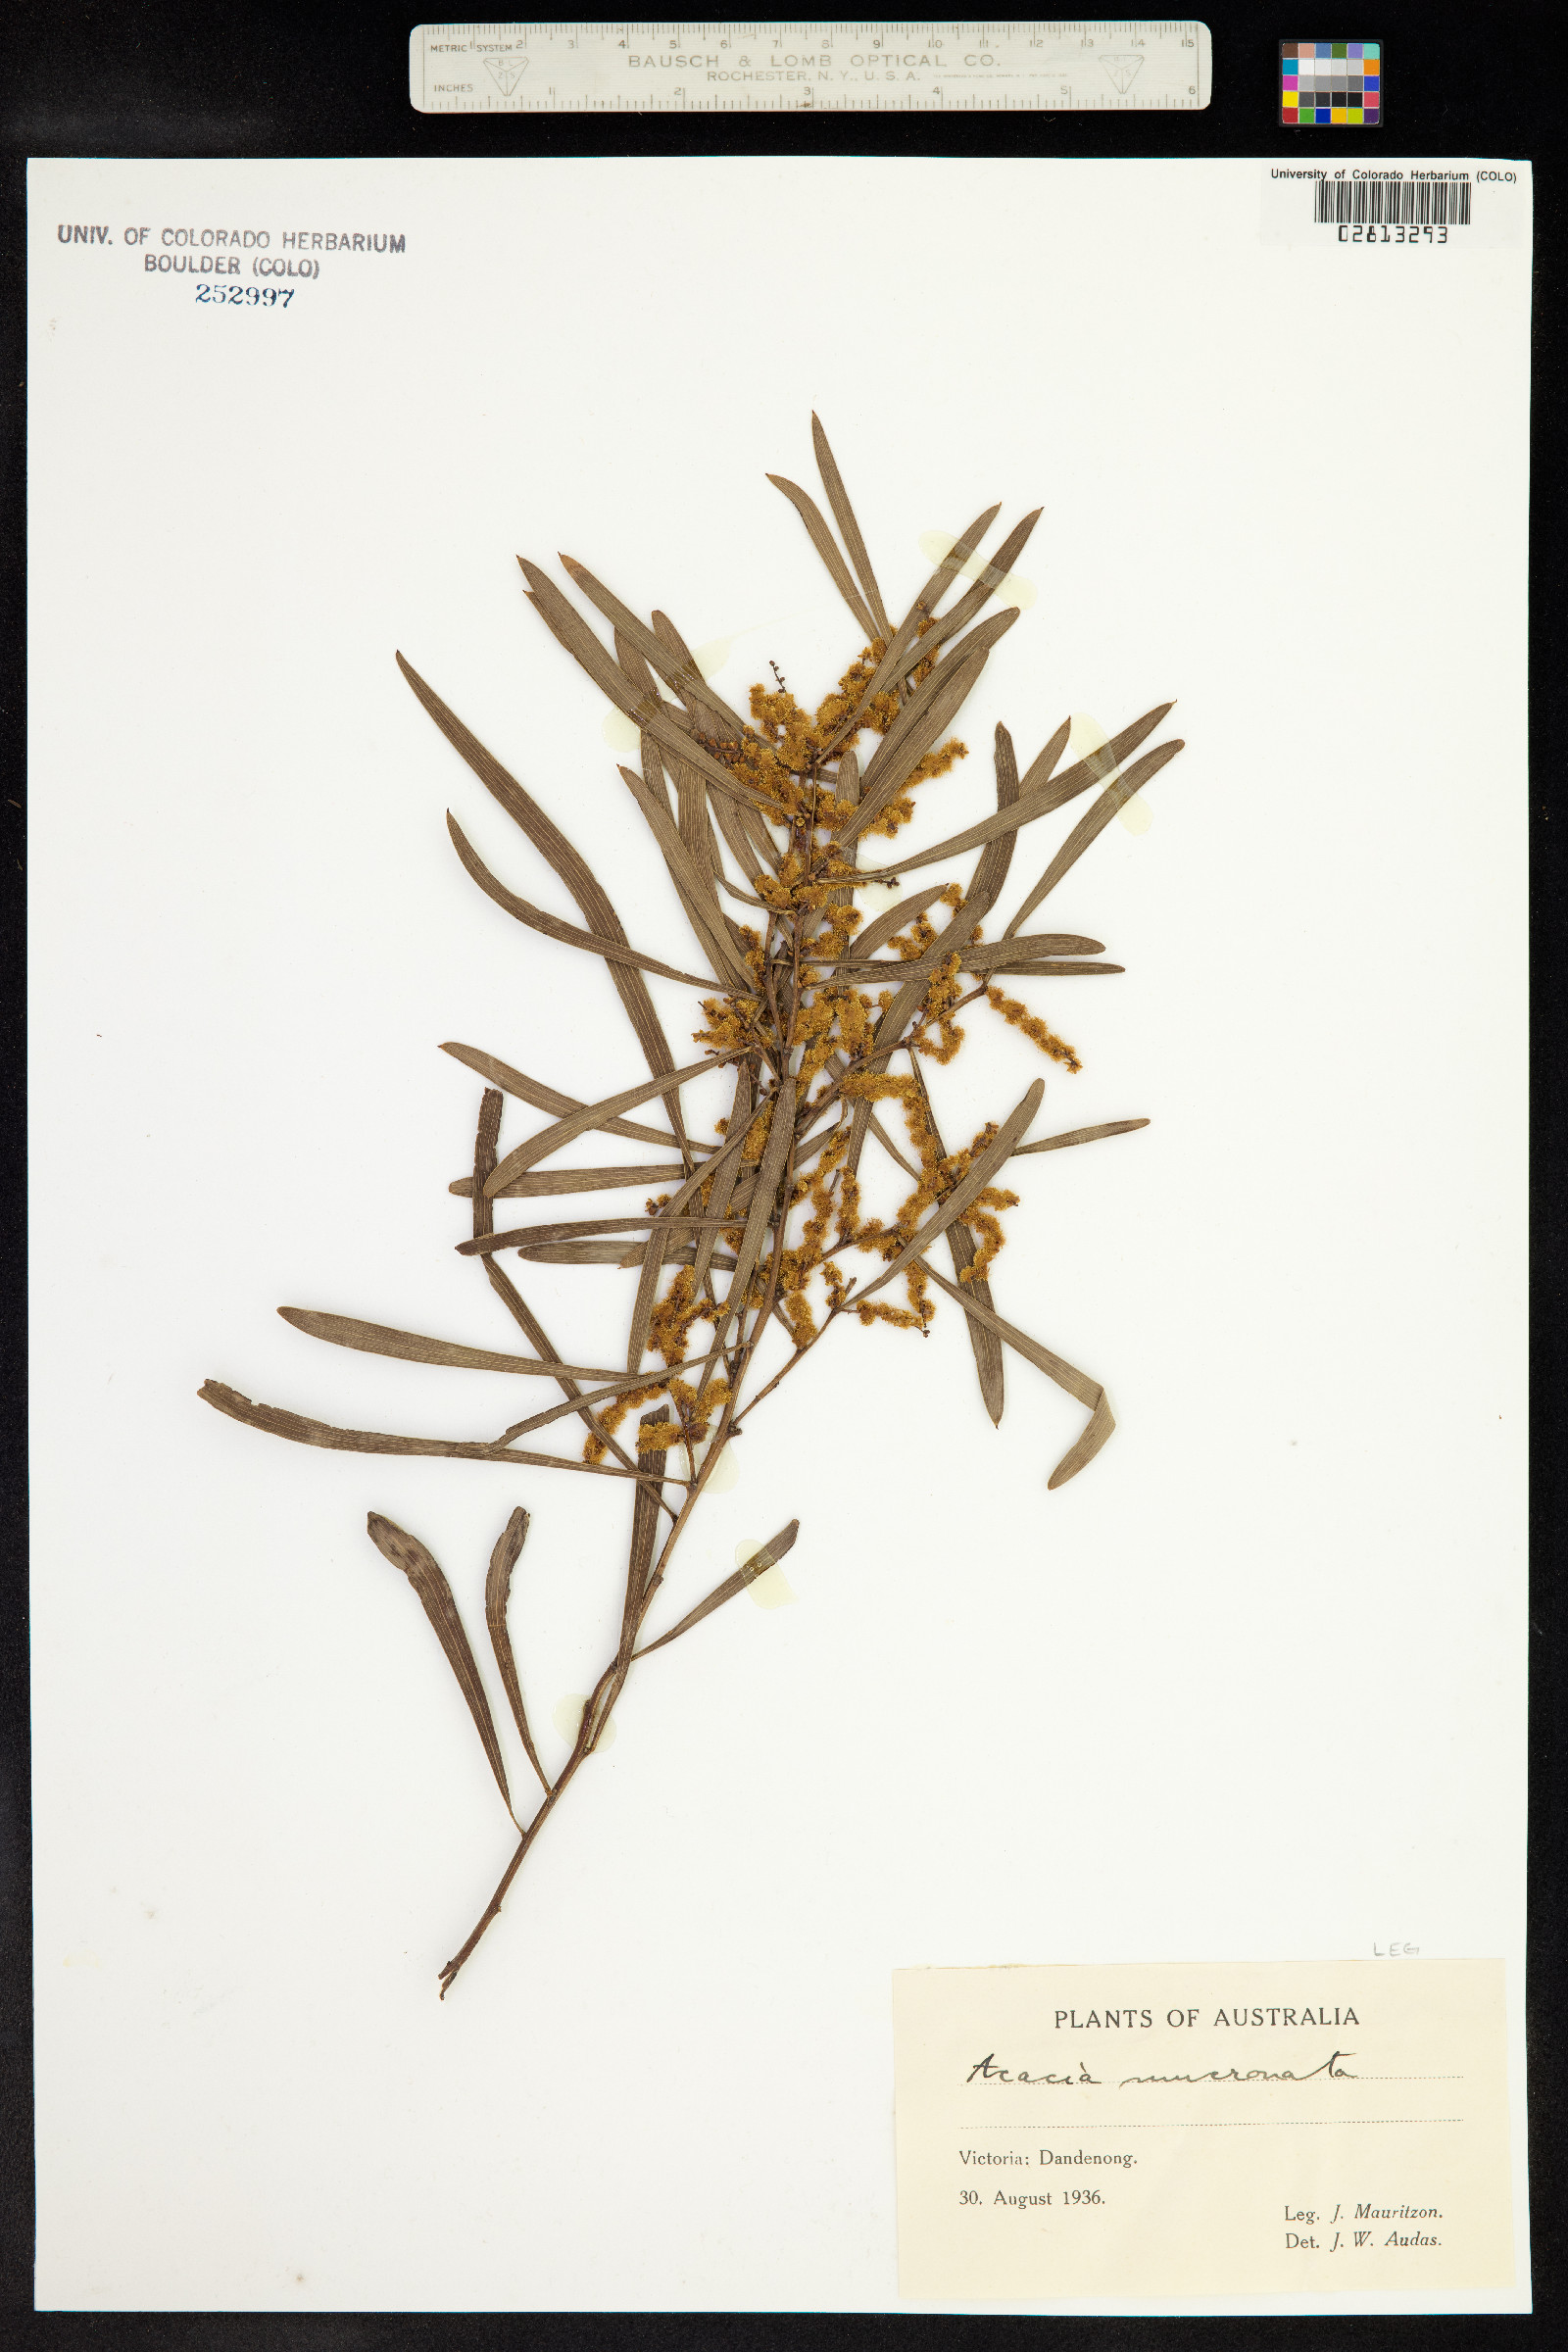 Acacia mucronata image